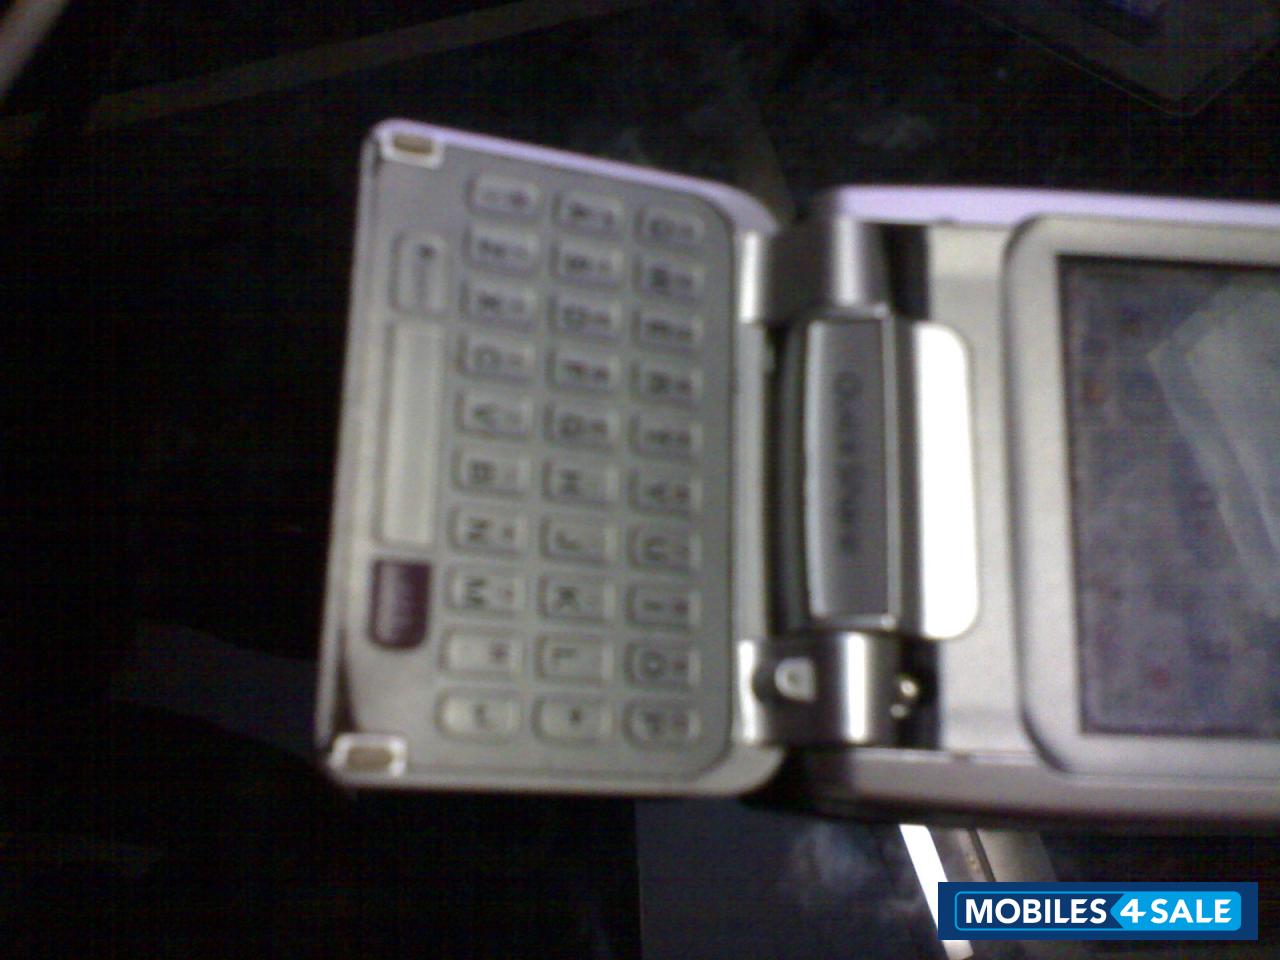 Silver Sony Ericsson P910